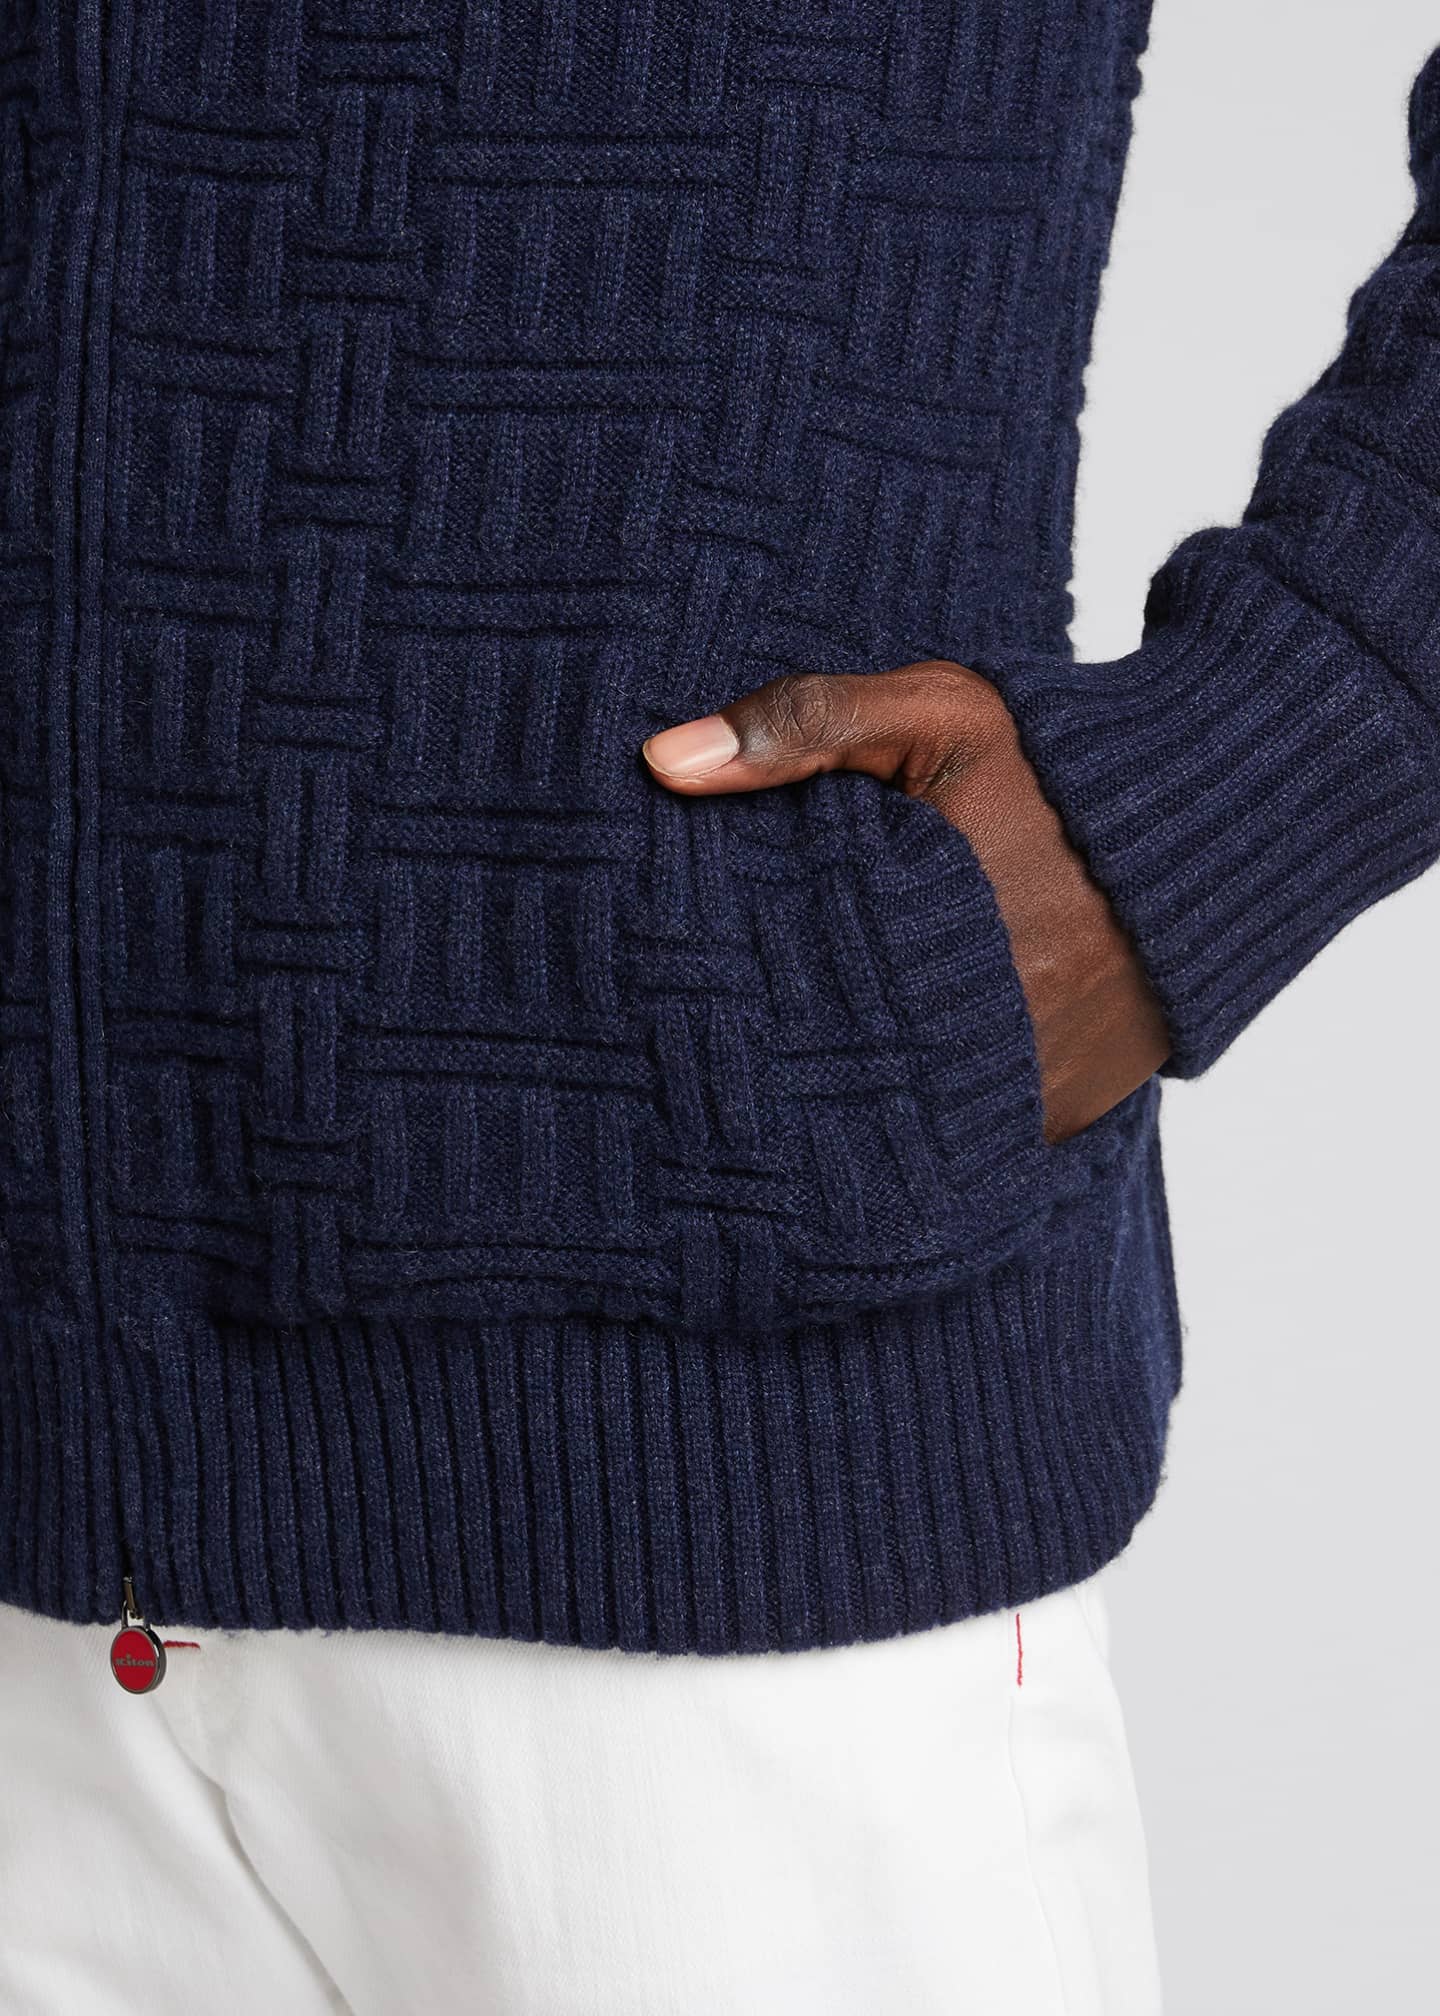 Kiton Men's Geometric Cashmere Full-Zip Sweater - Bergdorf Goodman